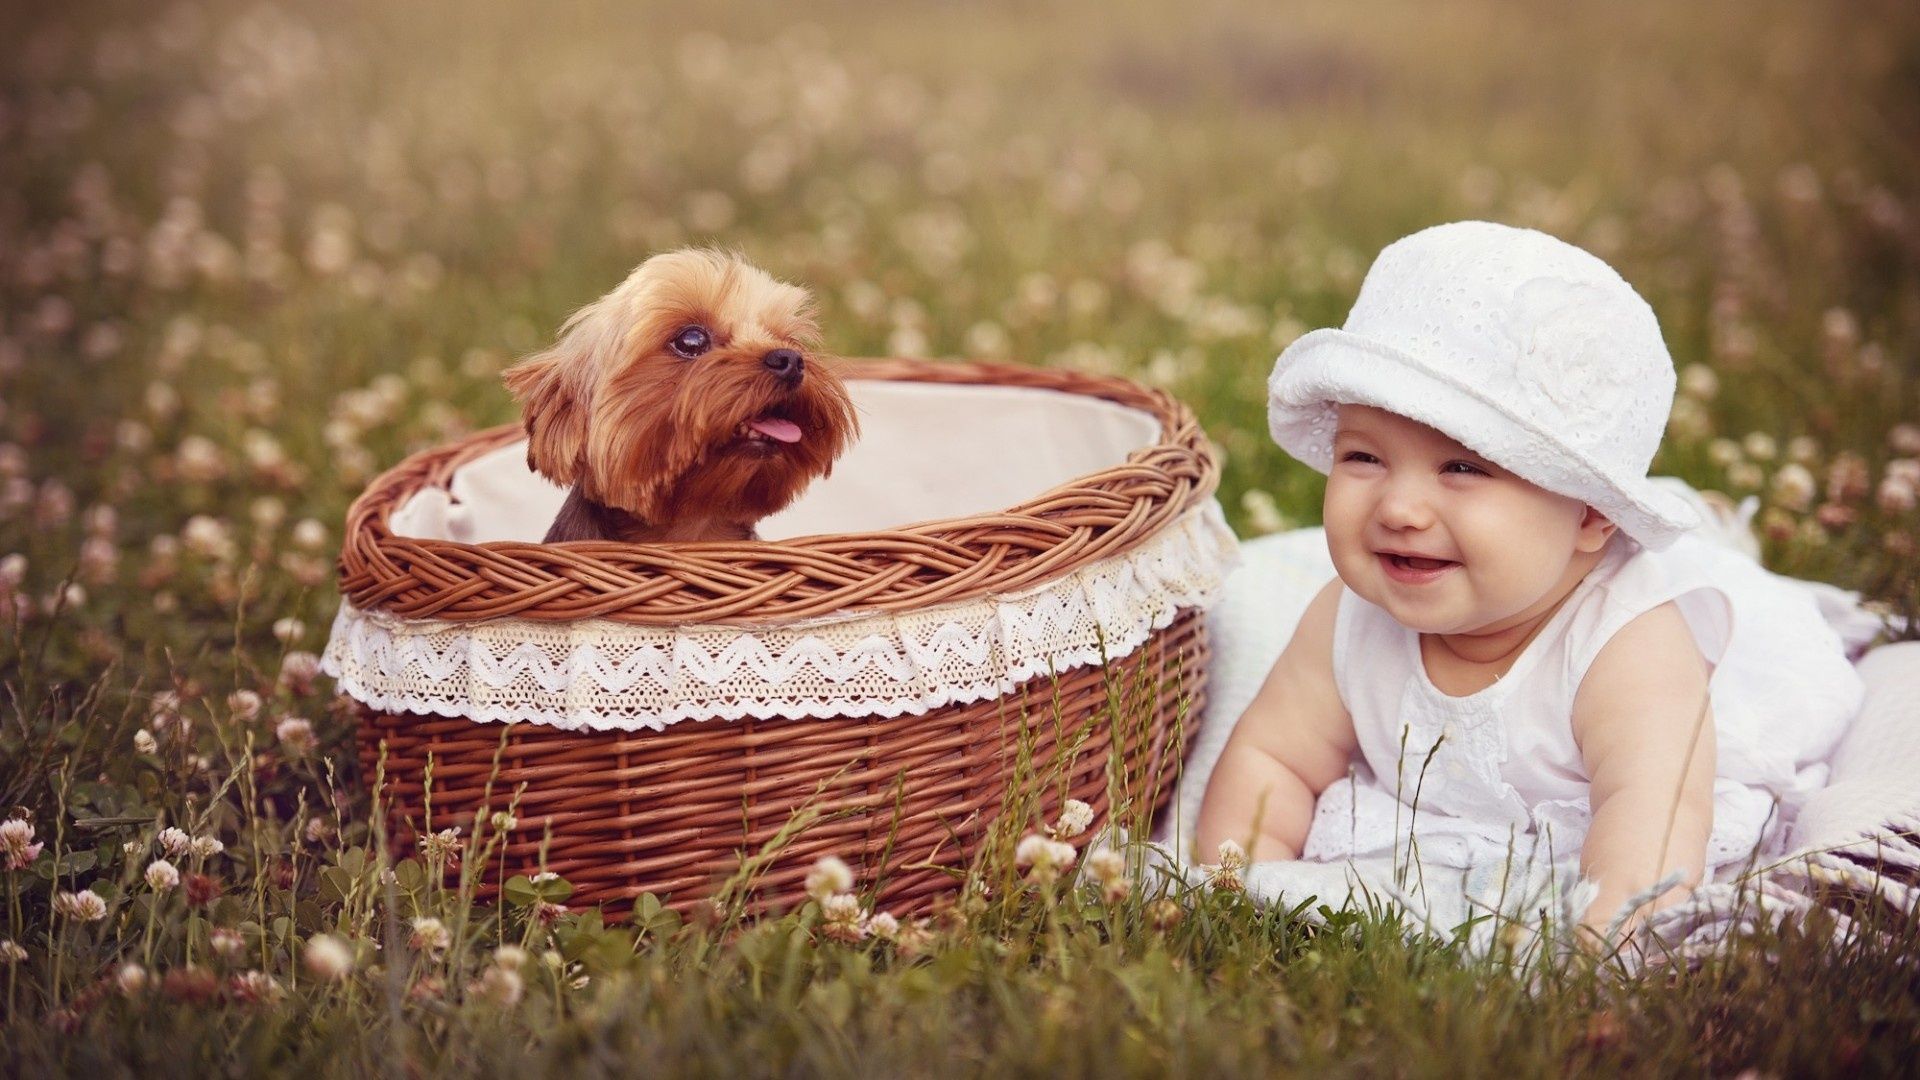 Cute Baby And Basket Puppy Desktop Wallpaper - DreamLoveWallpapers